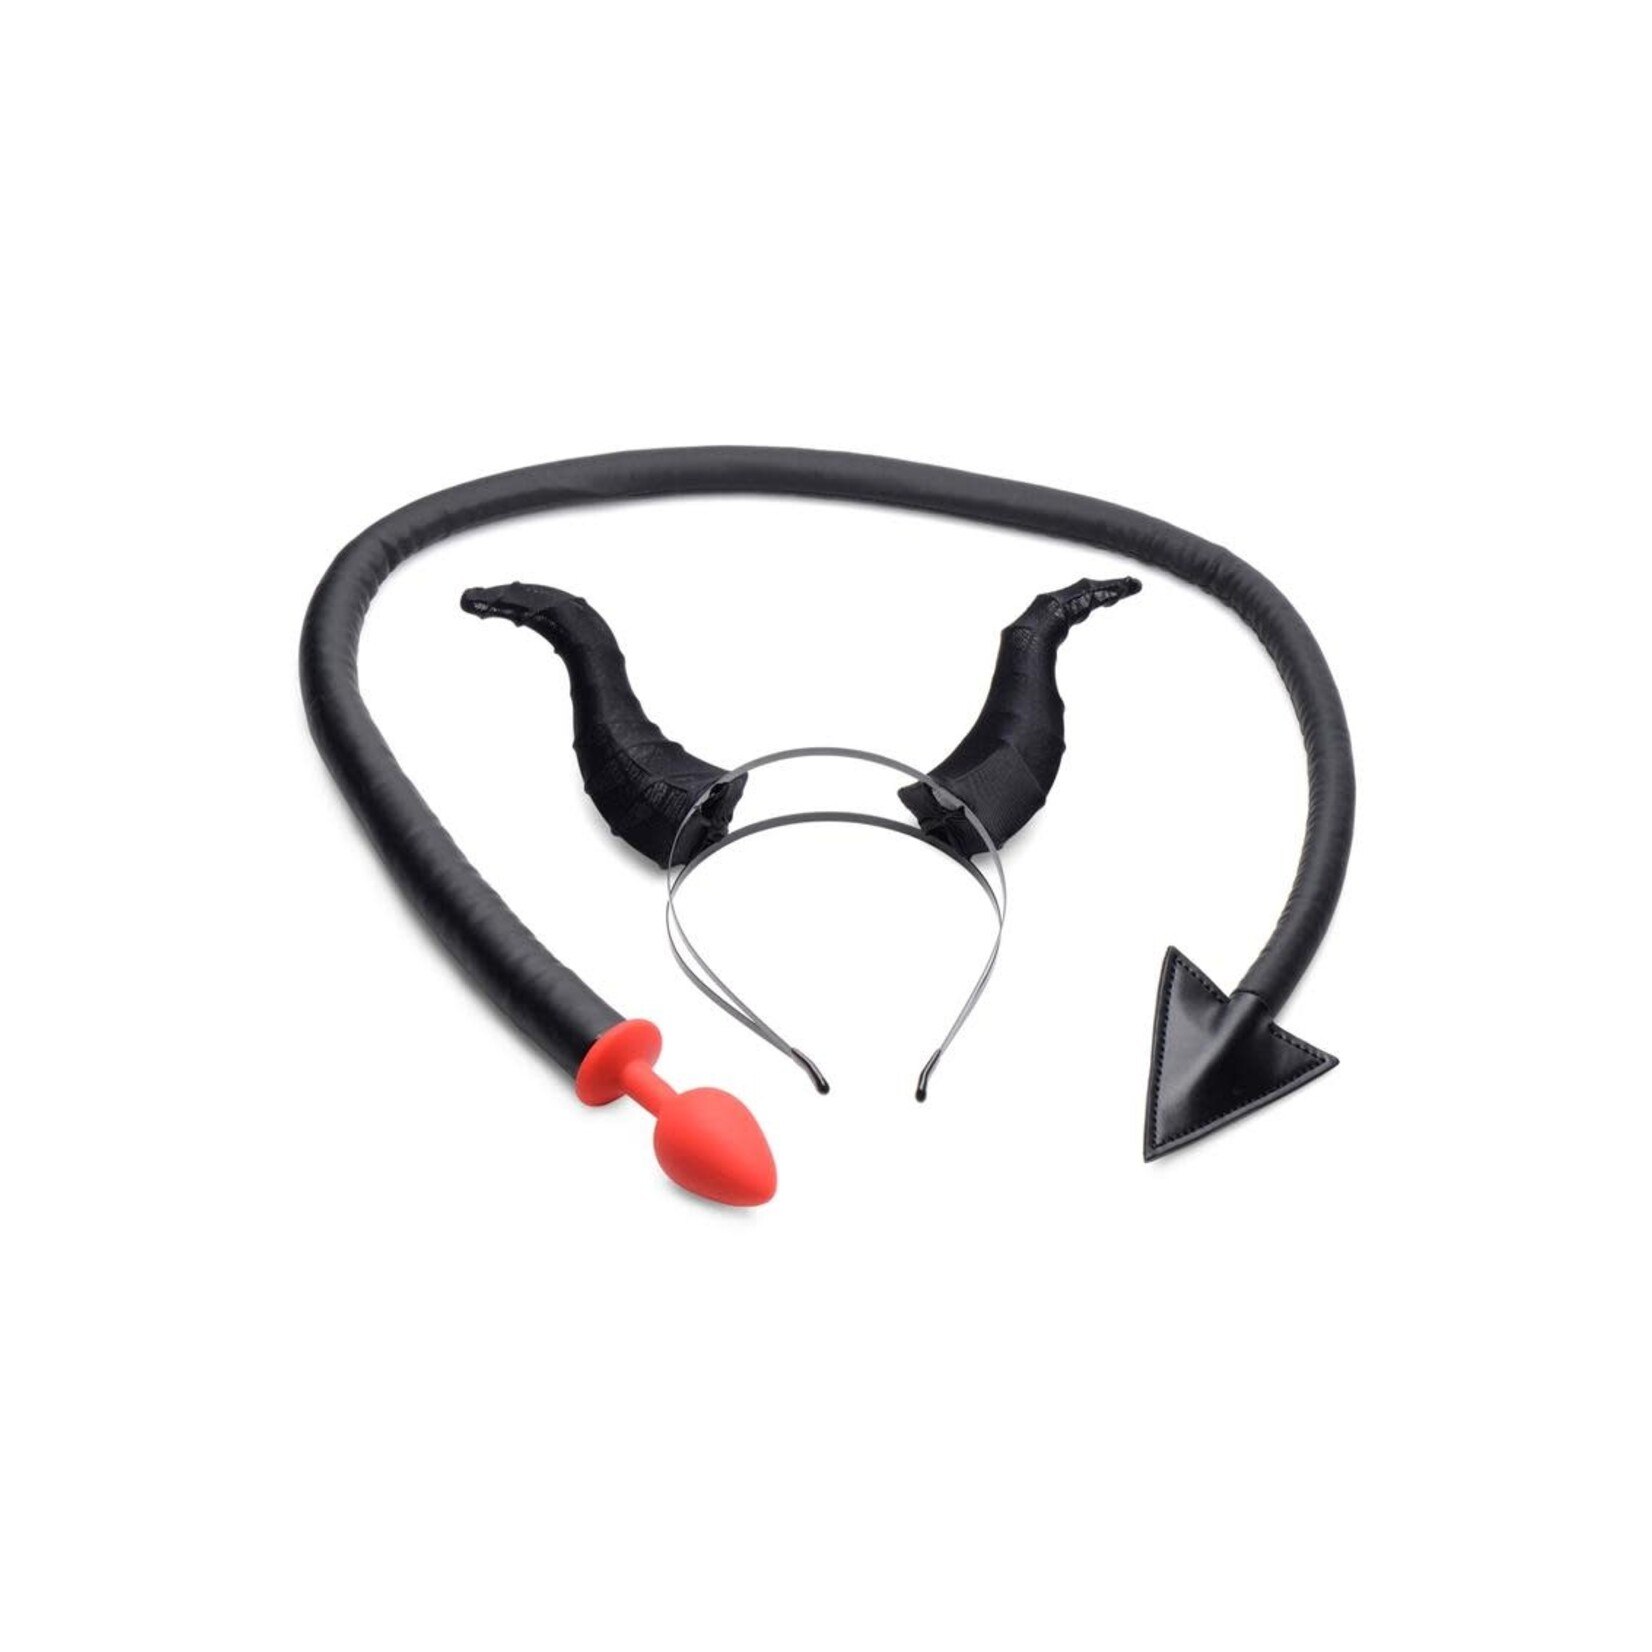 Tailz Devil Tail Anal Plug And Horns Set 2pc - Black